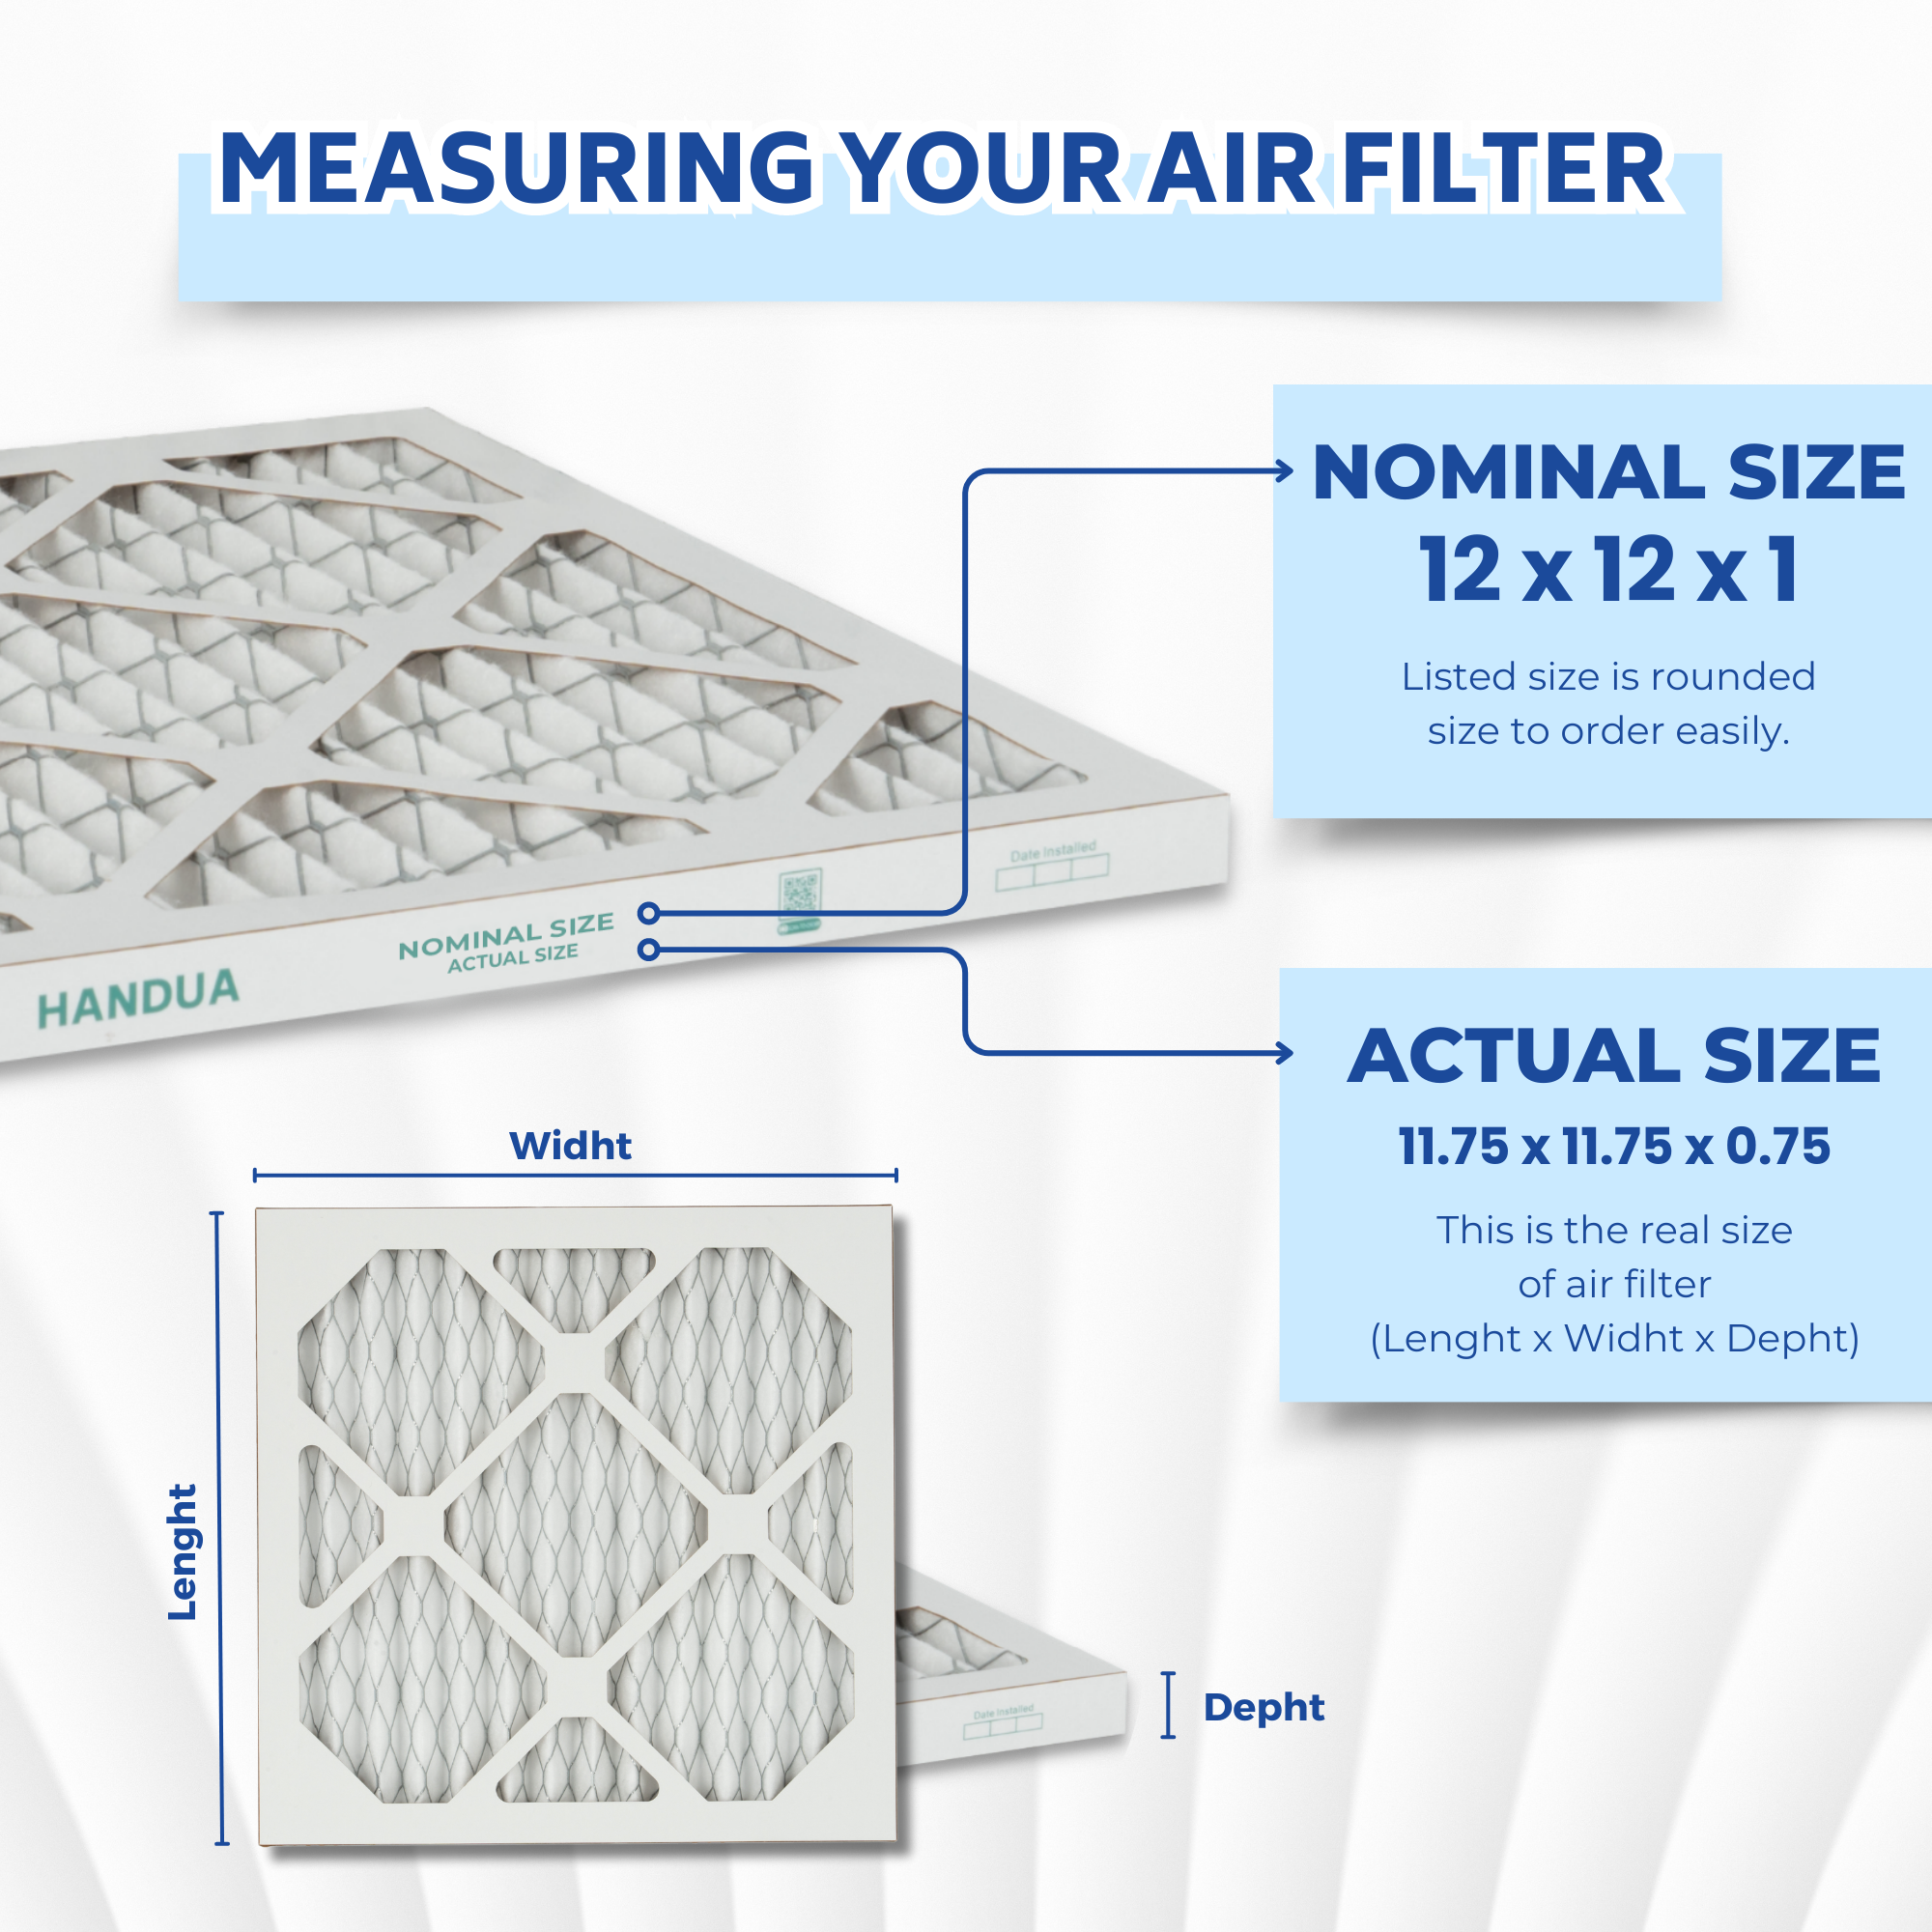 Handua 12x12x1 Air Filter MERV 11 Allergen Control, Plated Furnace AC Air Replacement Filter, 4 Pack (Actual Size: 11.75" x 11.75" x 0.75")